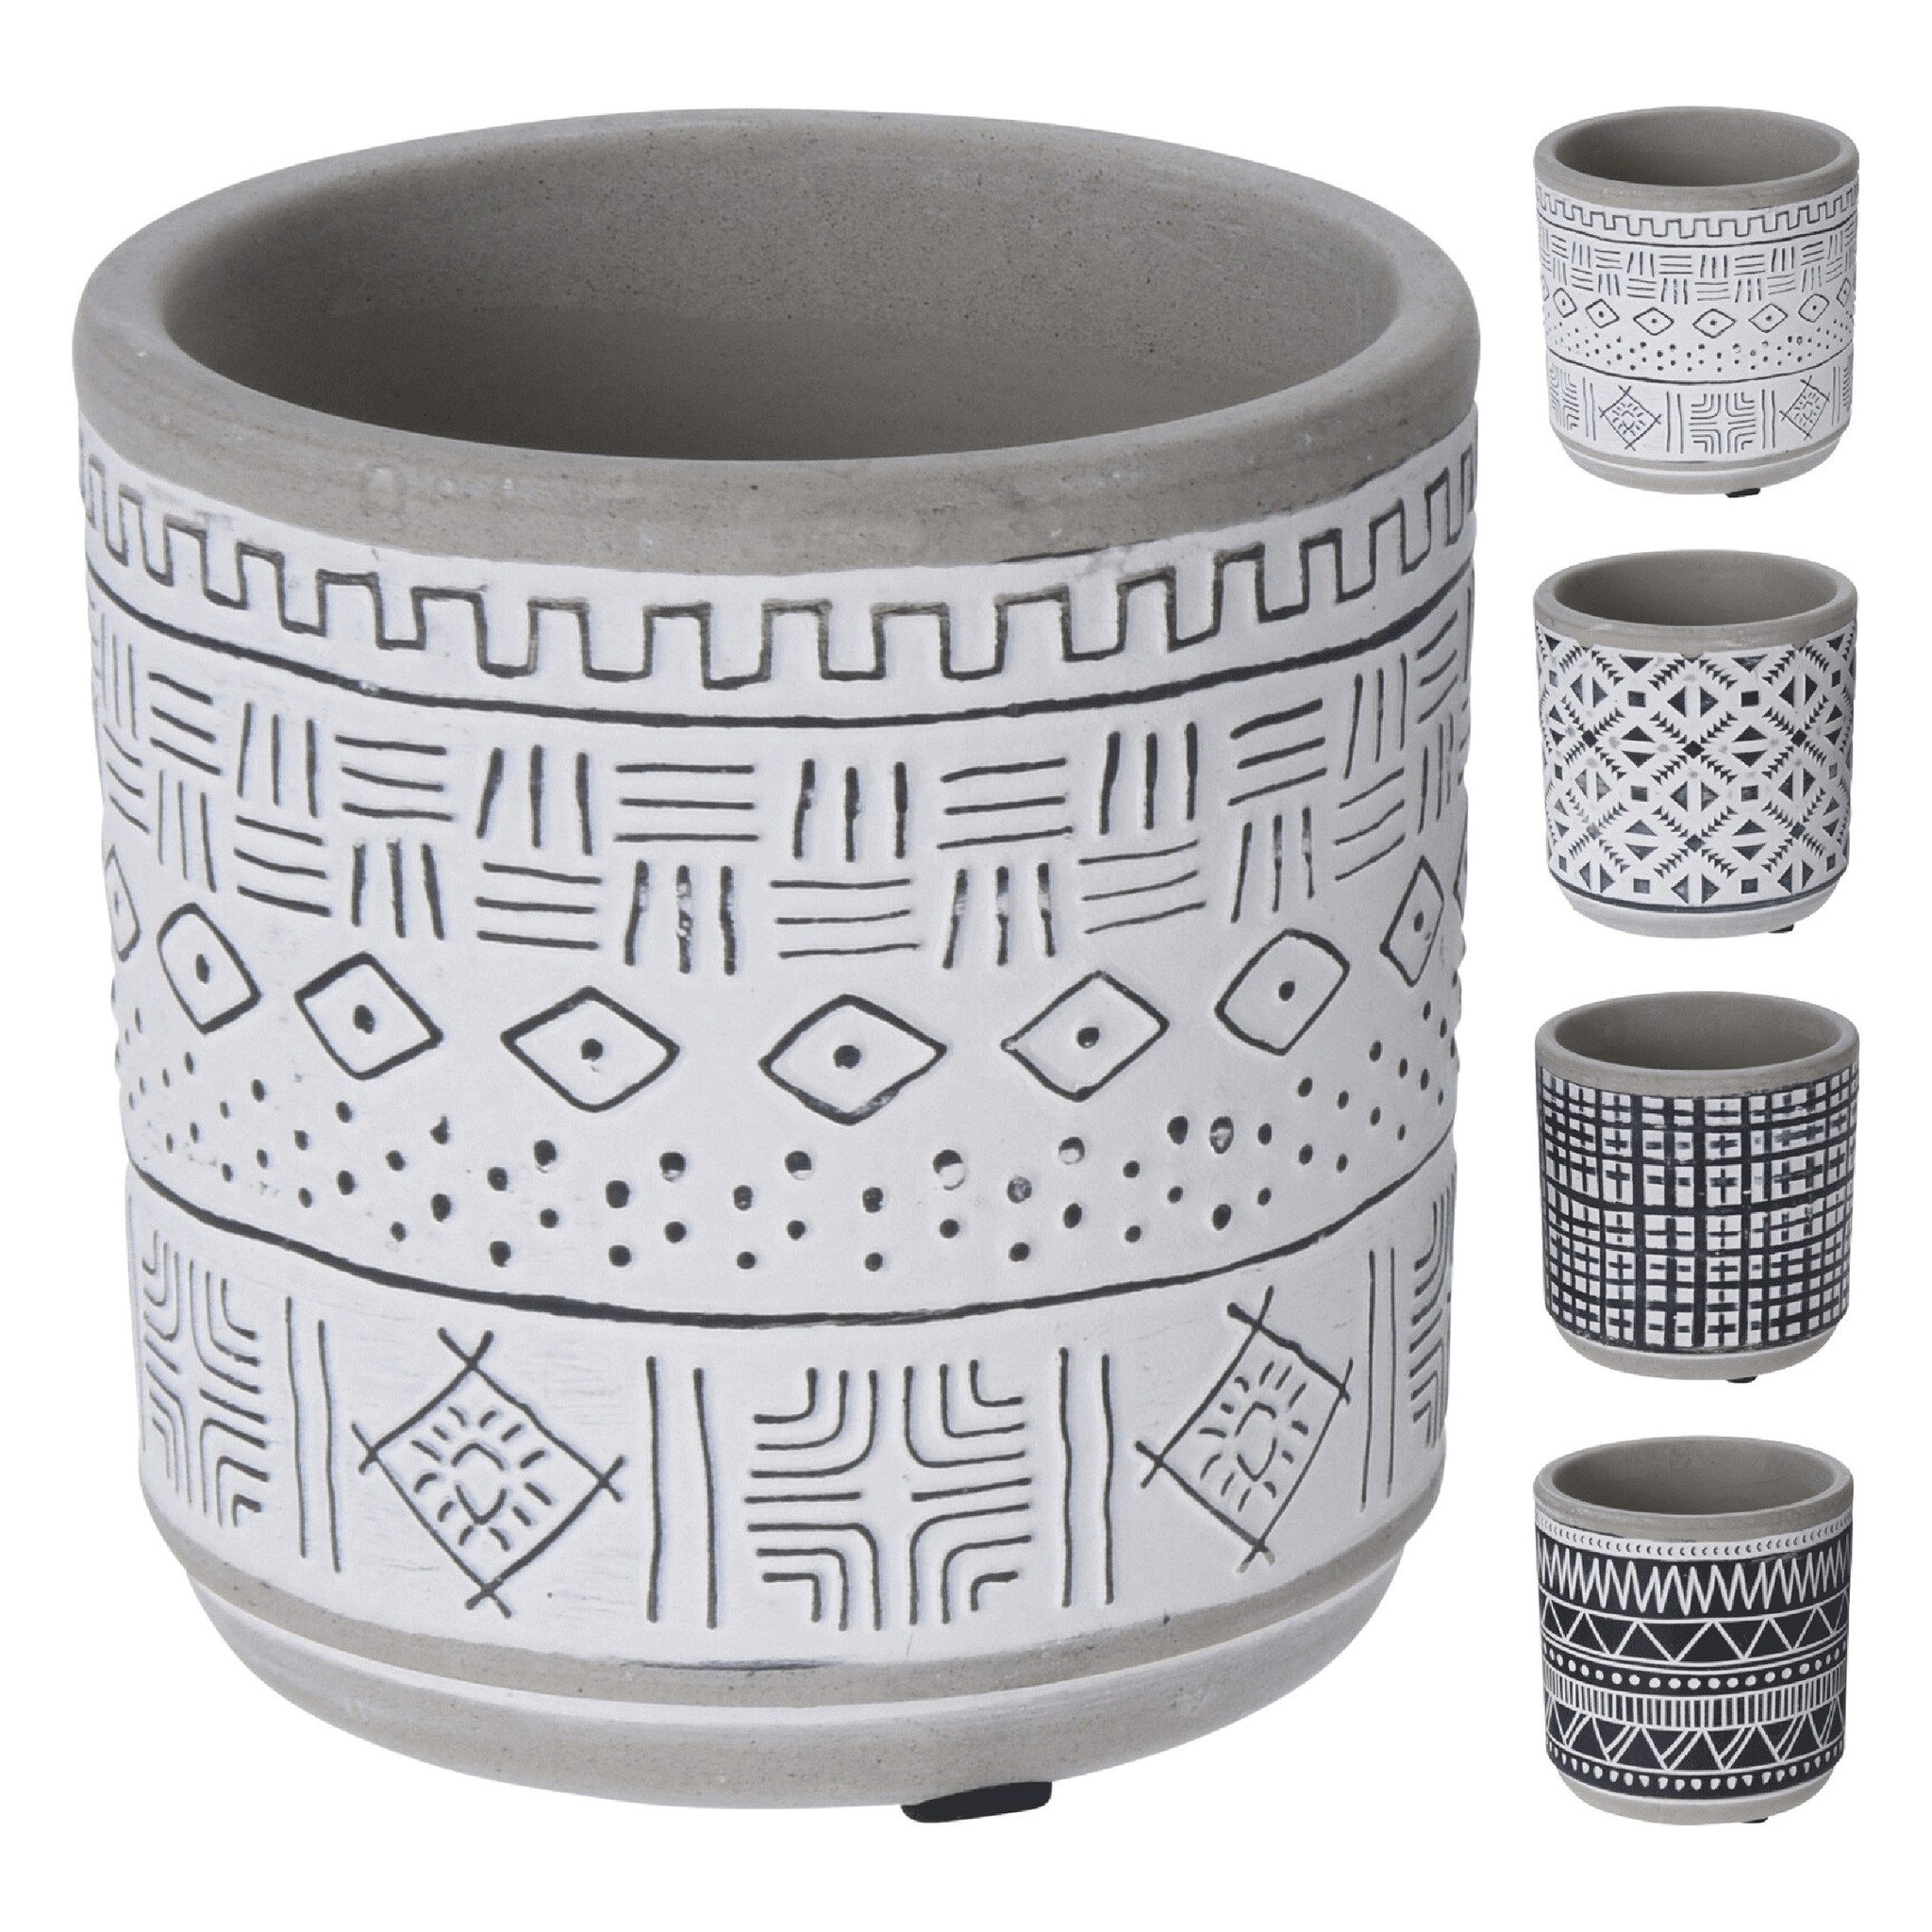 Koopmann Blumentopf, Blumentopf / Übertopf Keramik 9cm Weiß Schwarz 1 Stück sortiert